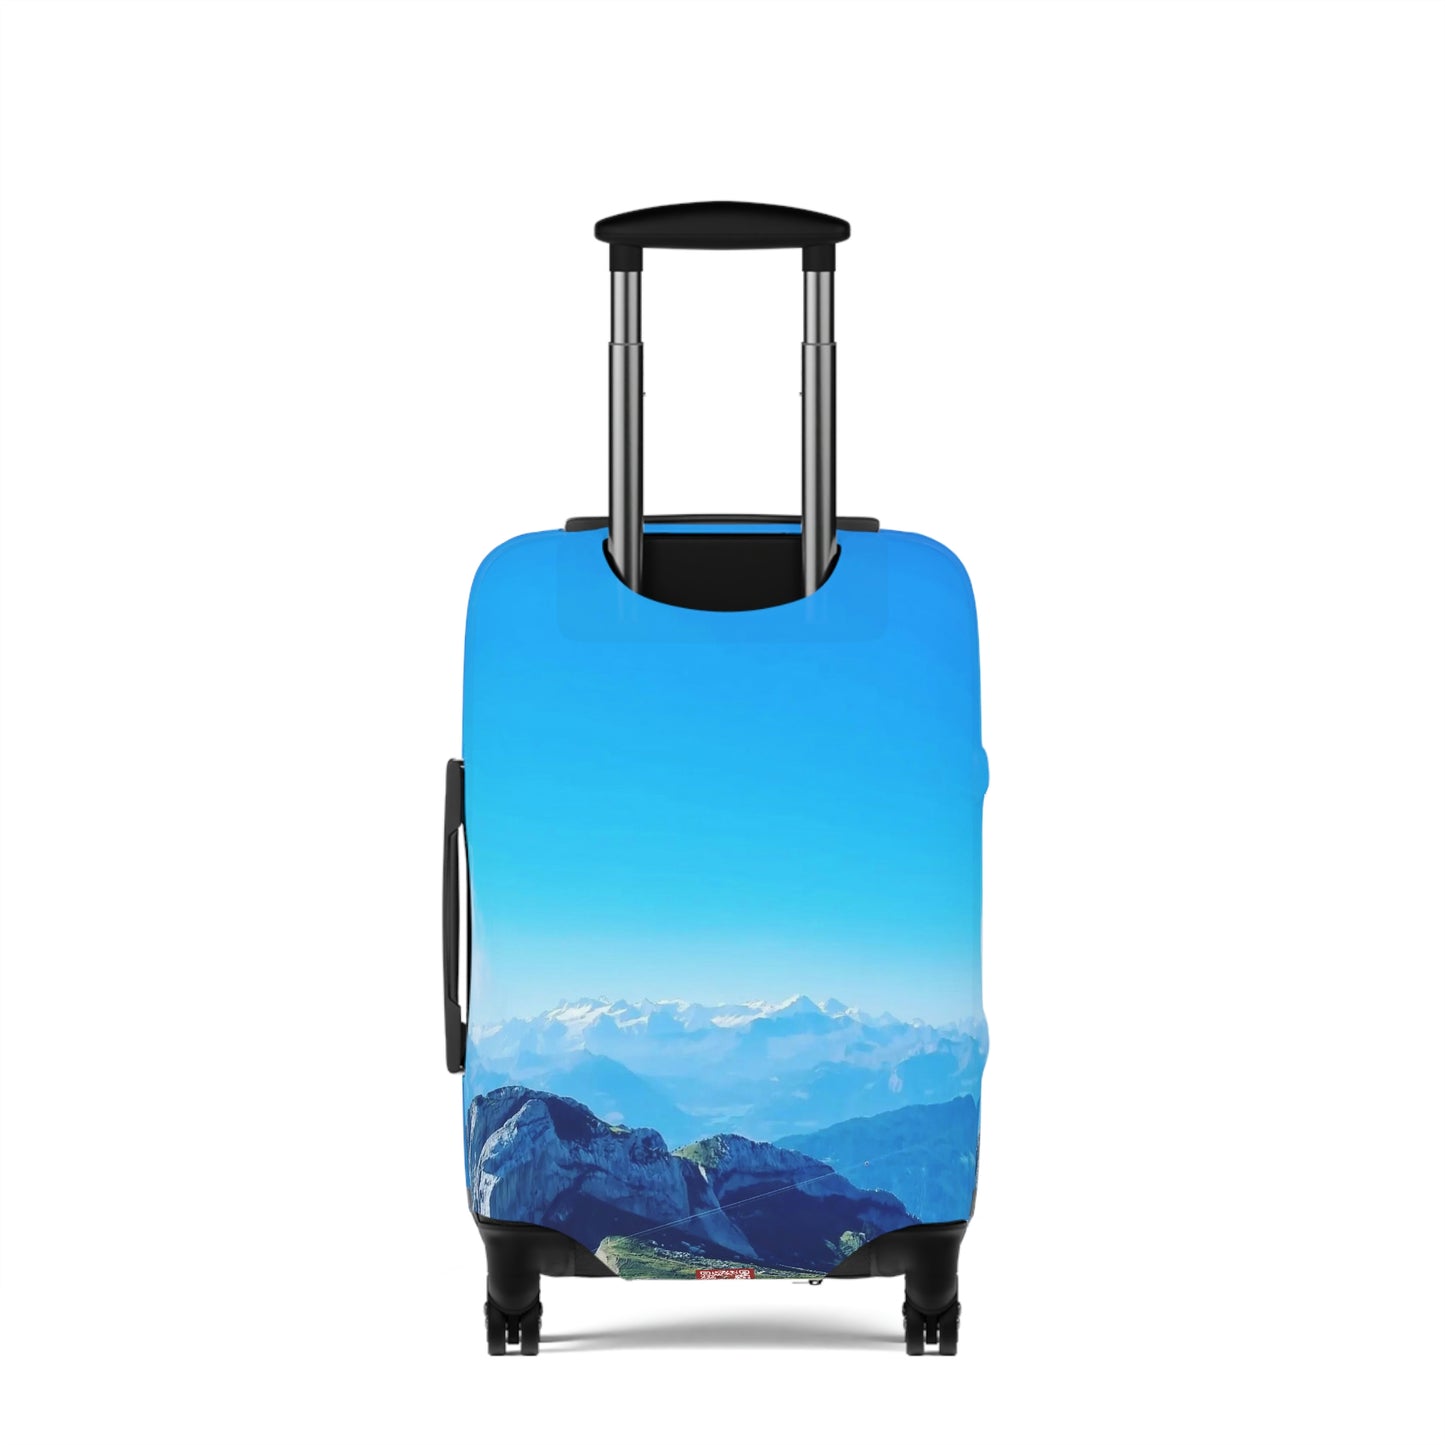 The Mt. Pilatus View | Switzerland | Luggage Cover